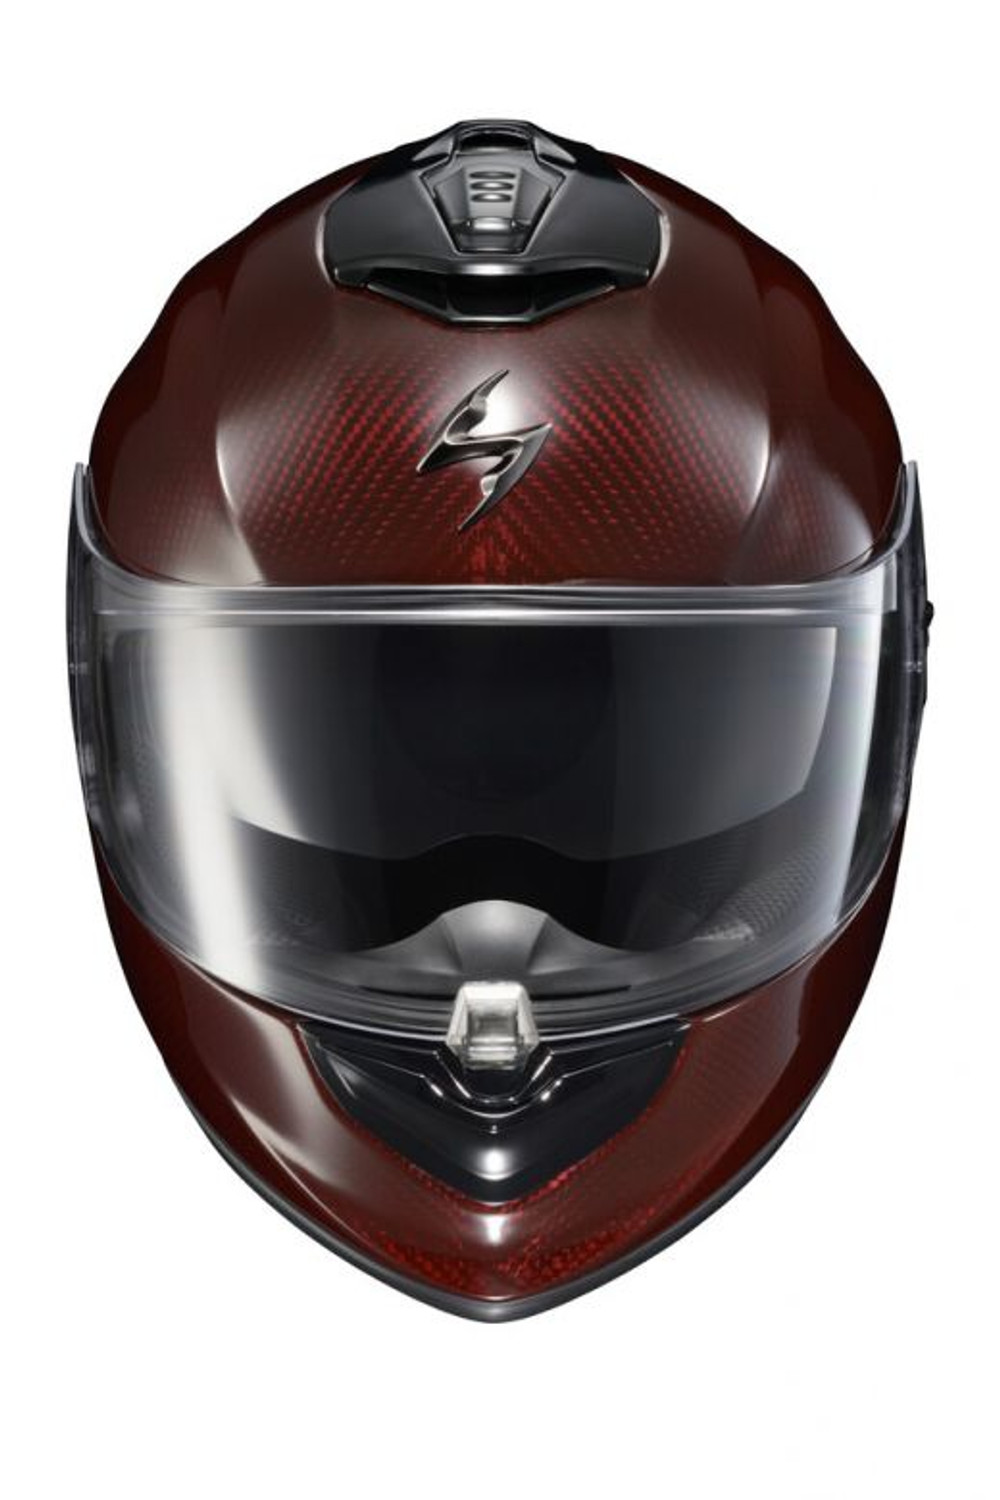 Scorpion EXO ST1400 Red Carbon Motorcycle Helmet - $277.95